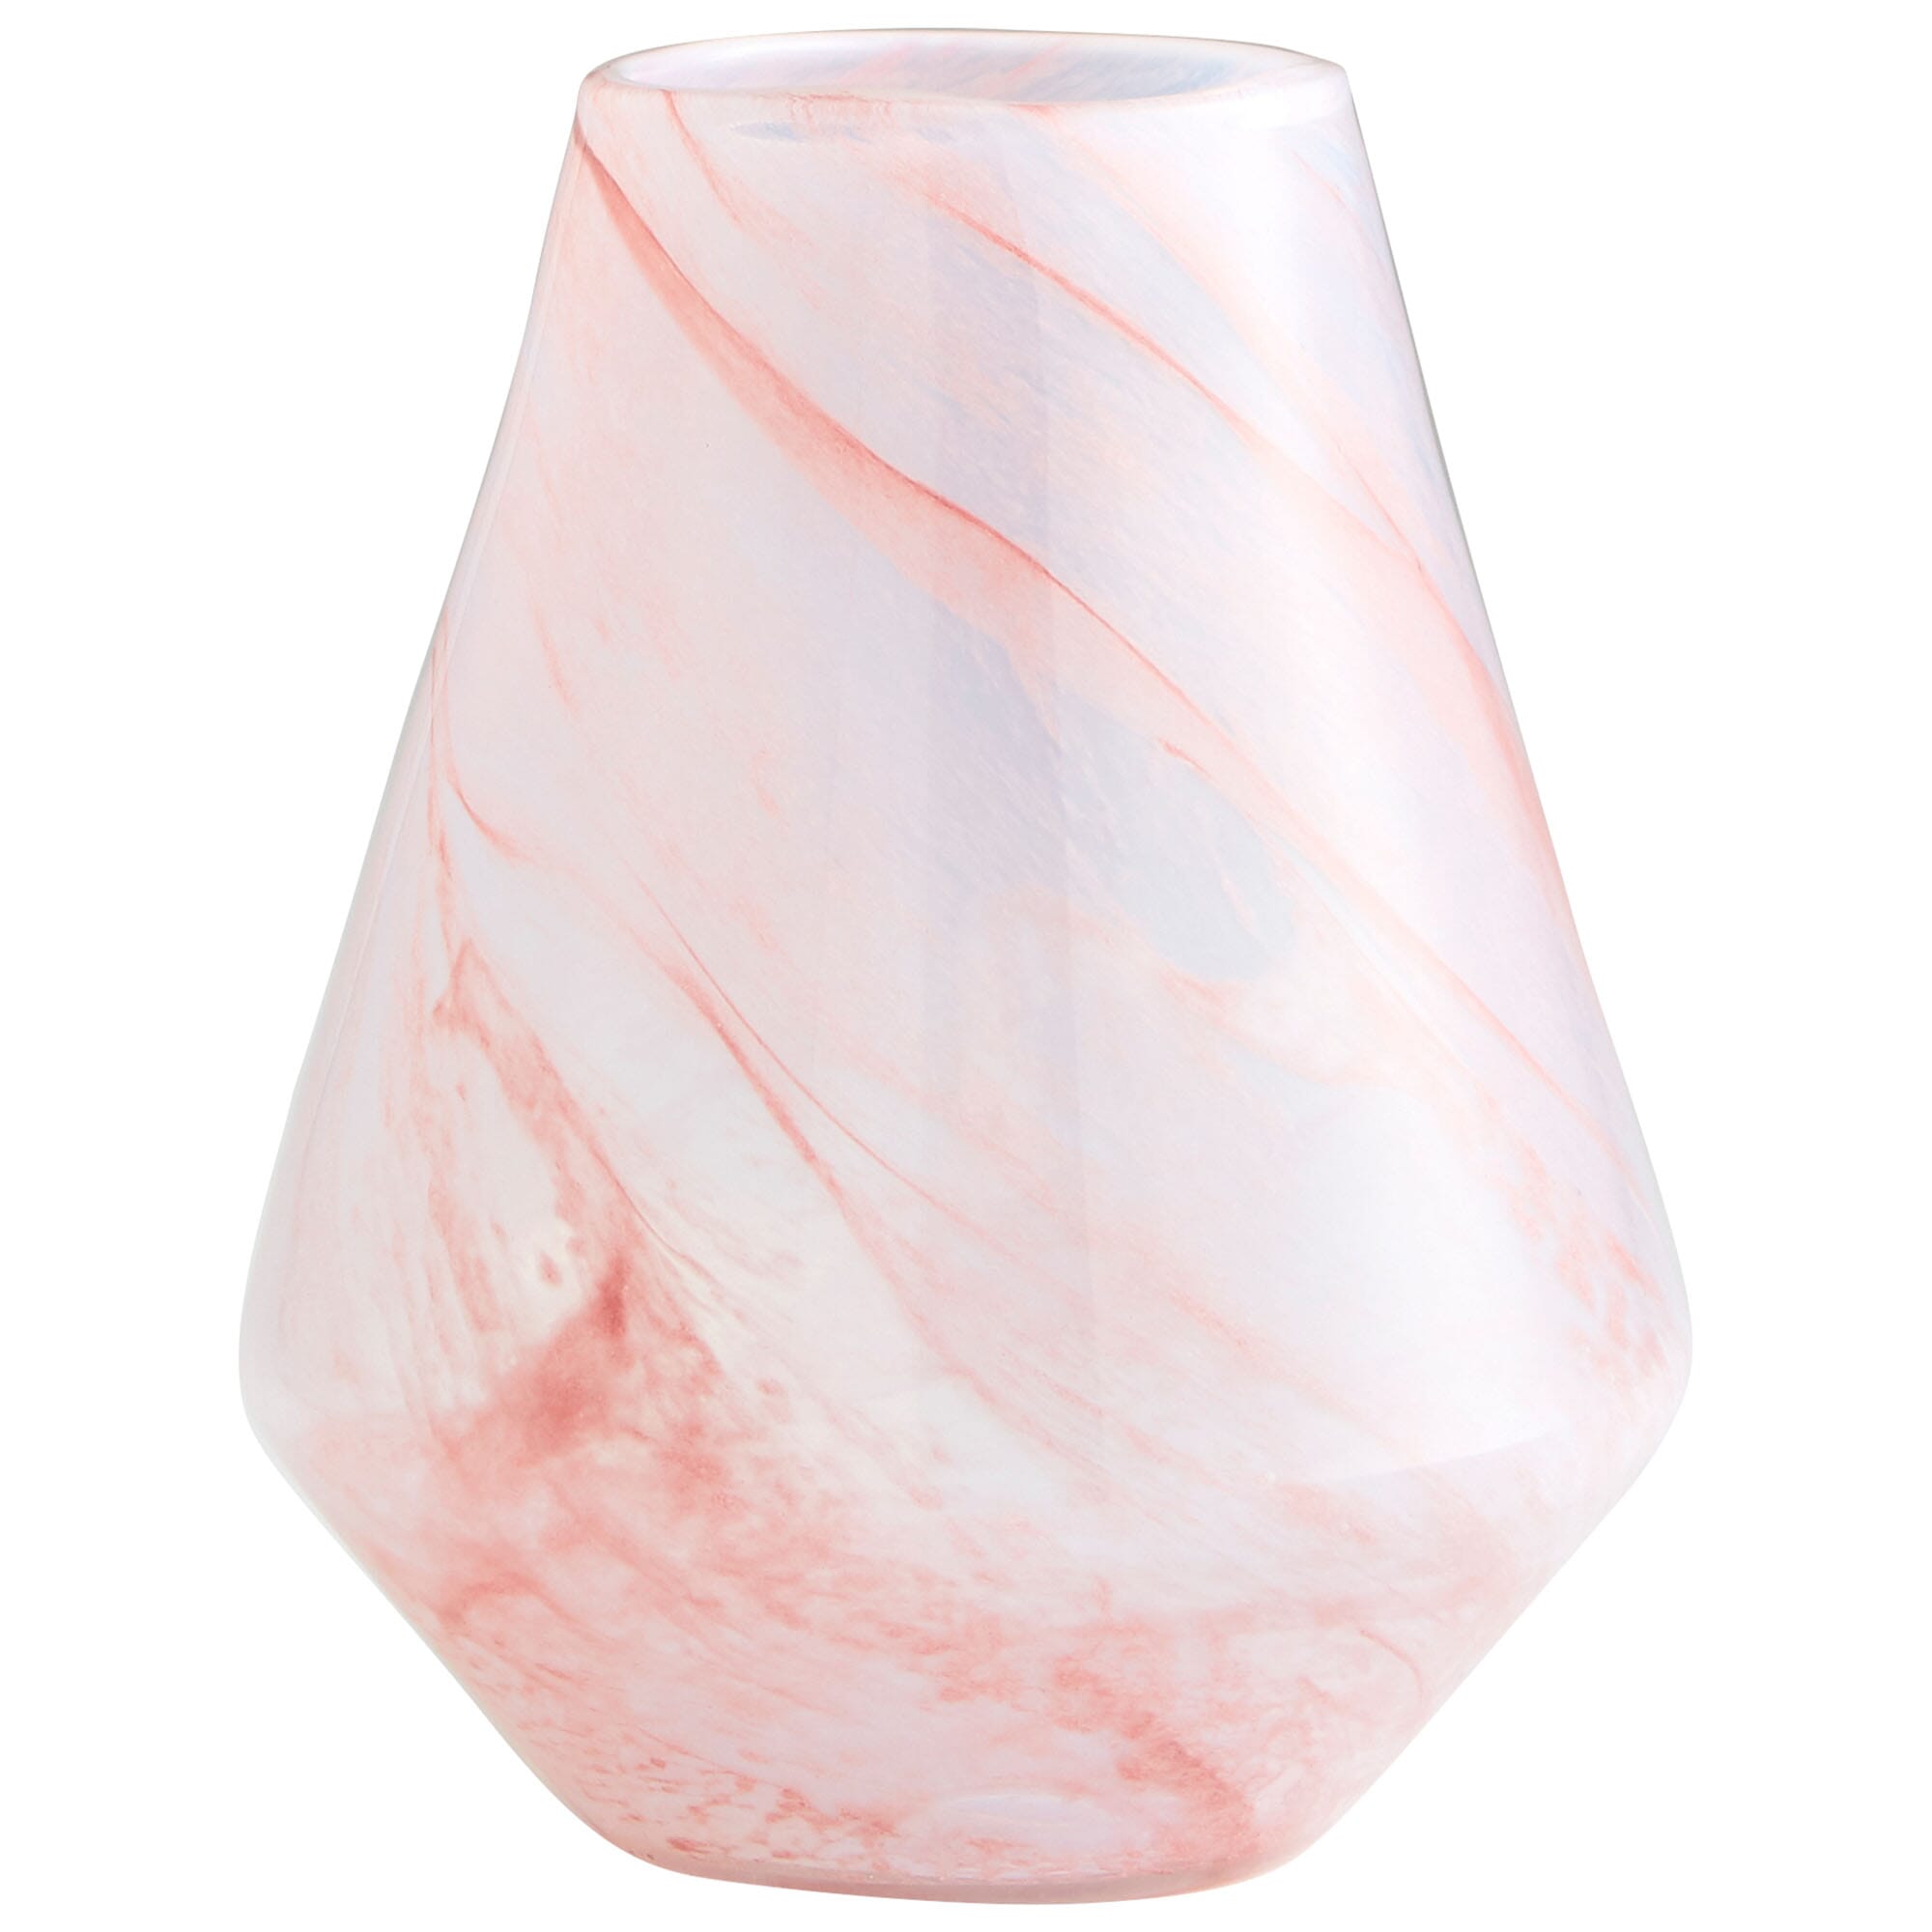 Atria Vase in Pink